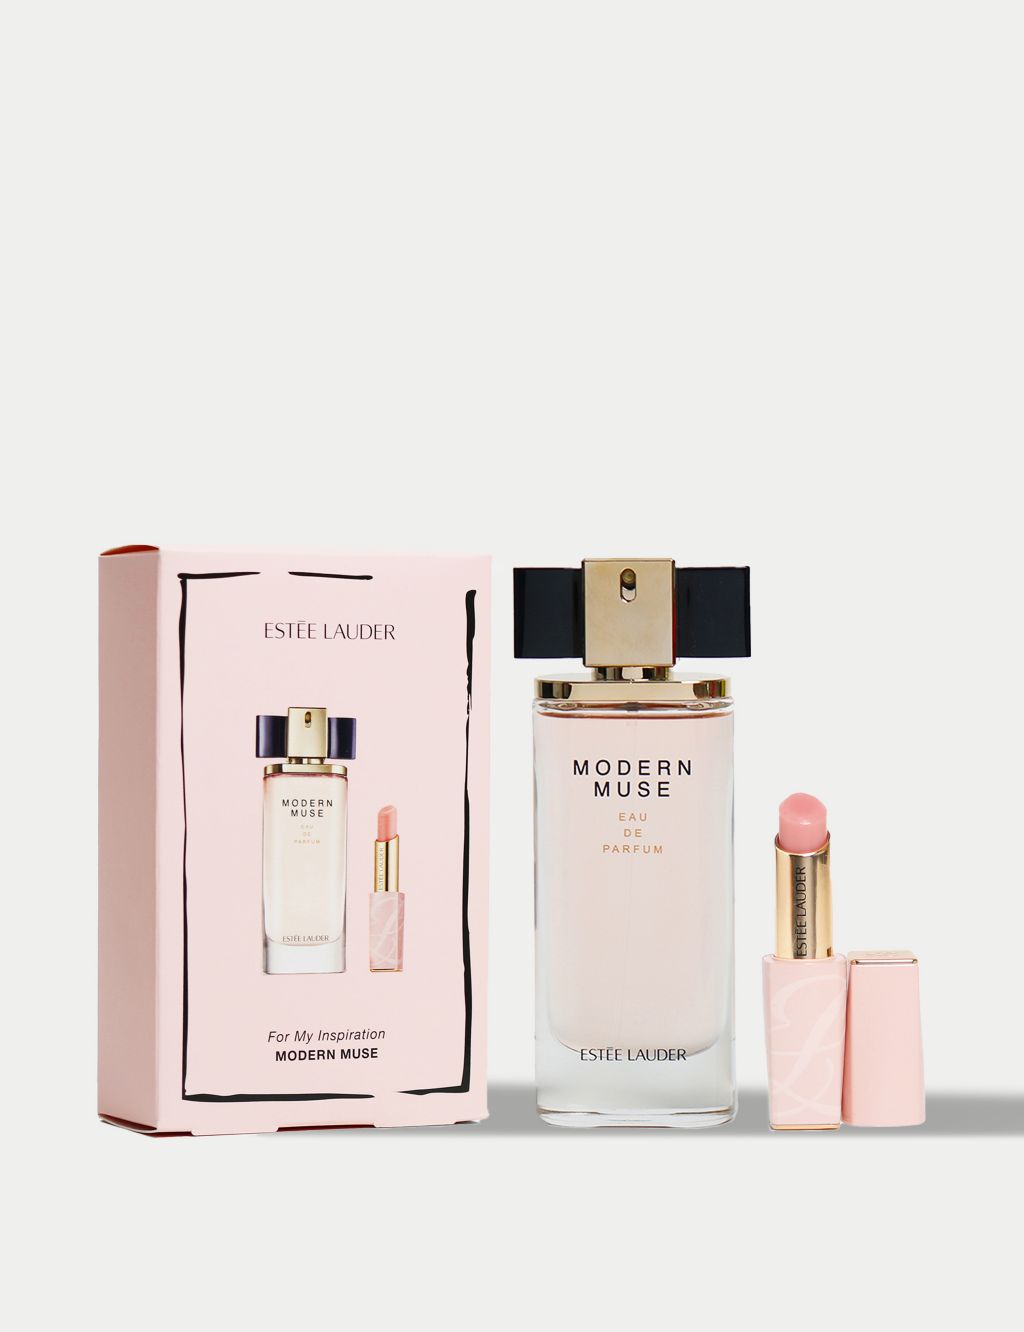 For My Inspiration Modern Muse Eau de Parfum Duo Gift Set